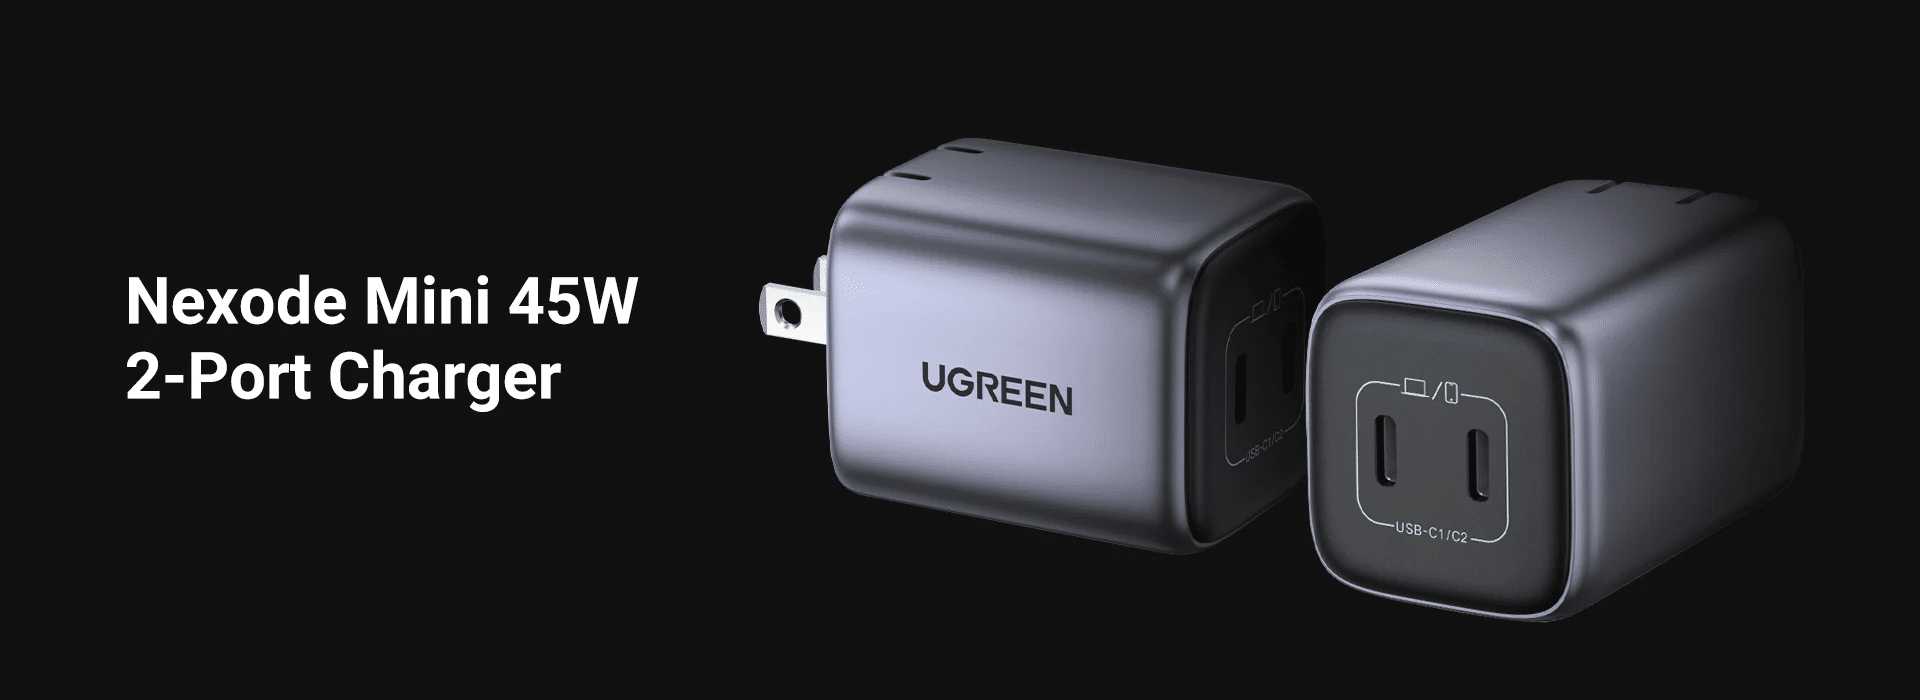 Ugreen Nexode Mini 45W Dual USB C Charger 2